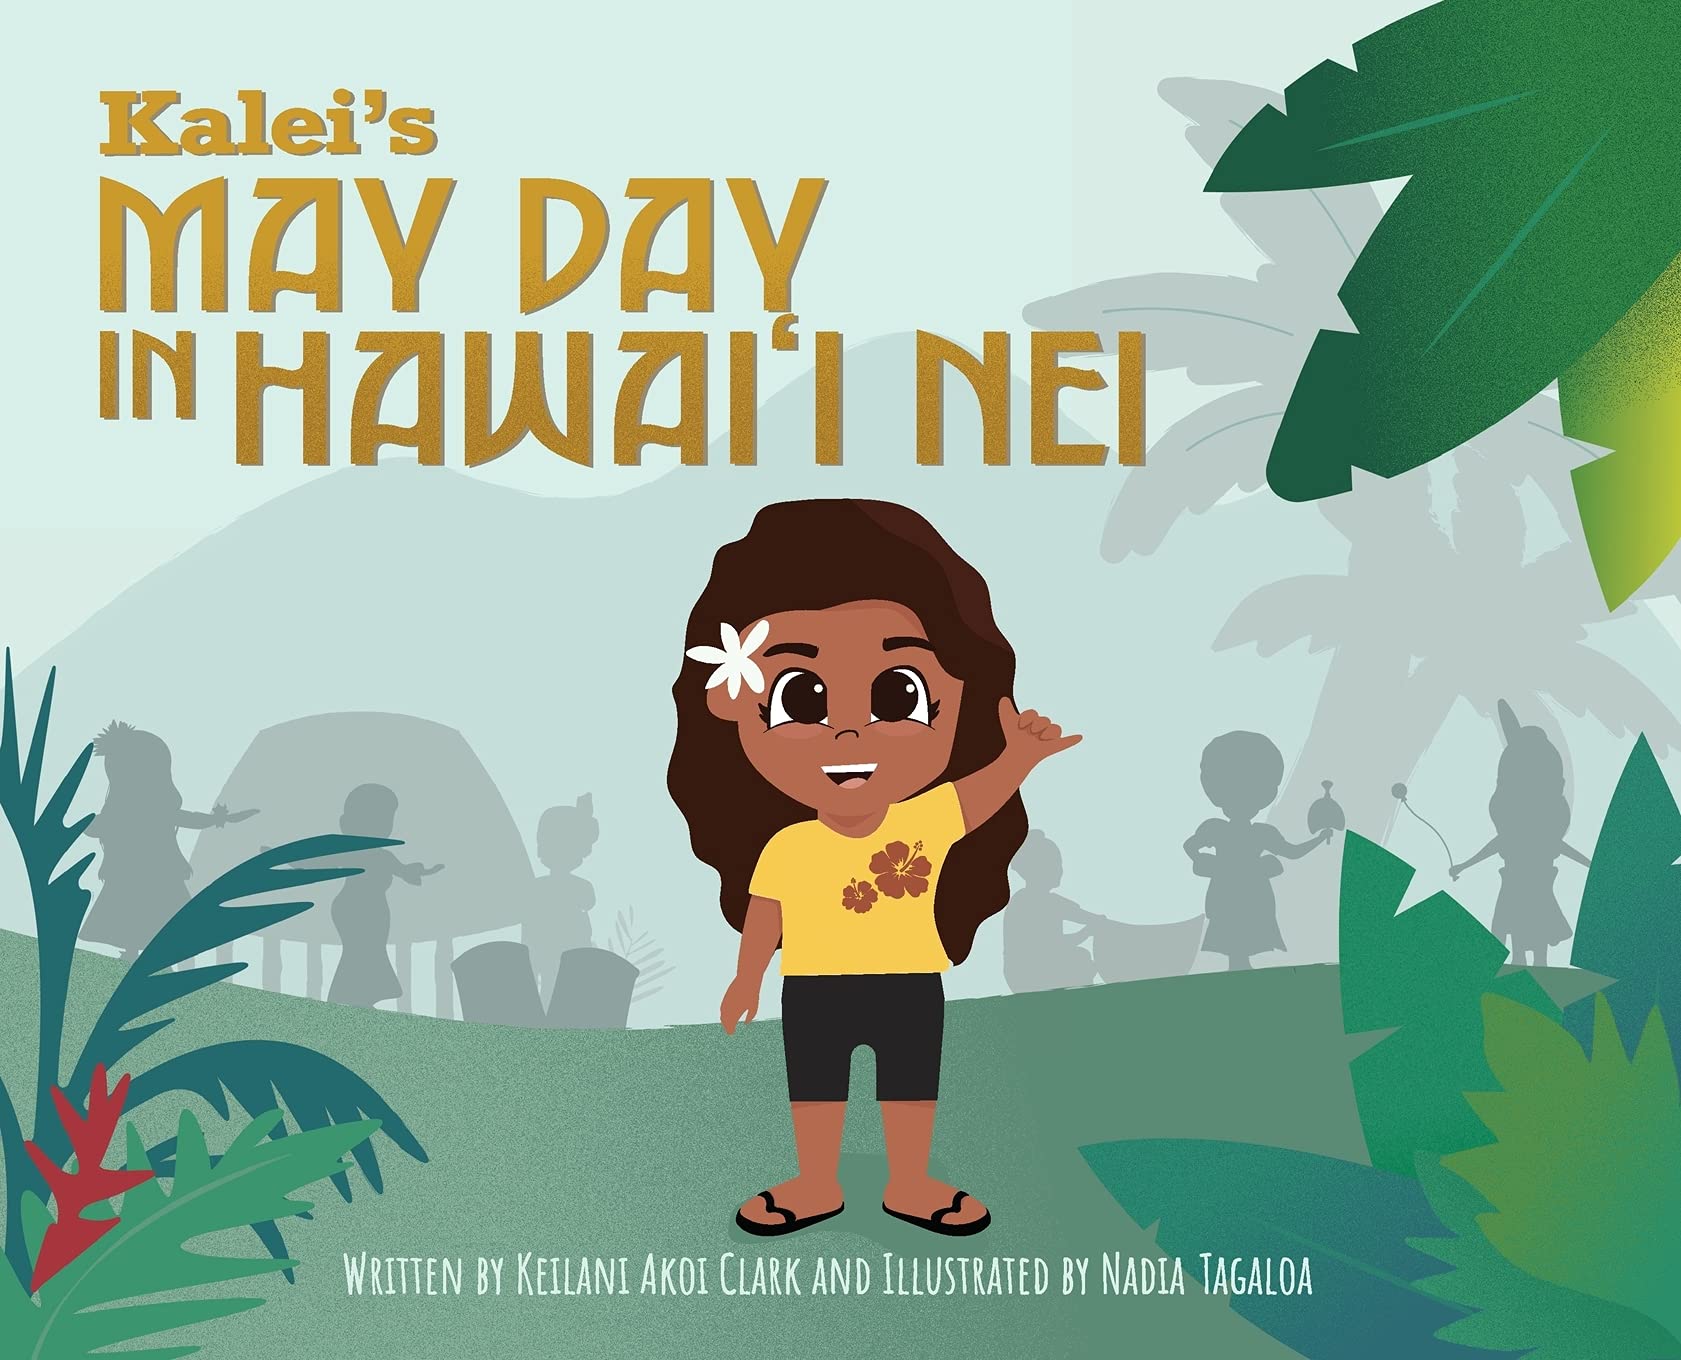 Kalei’s May Day in Hawai’i Nei